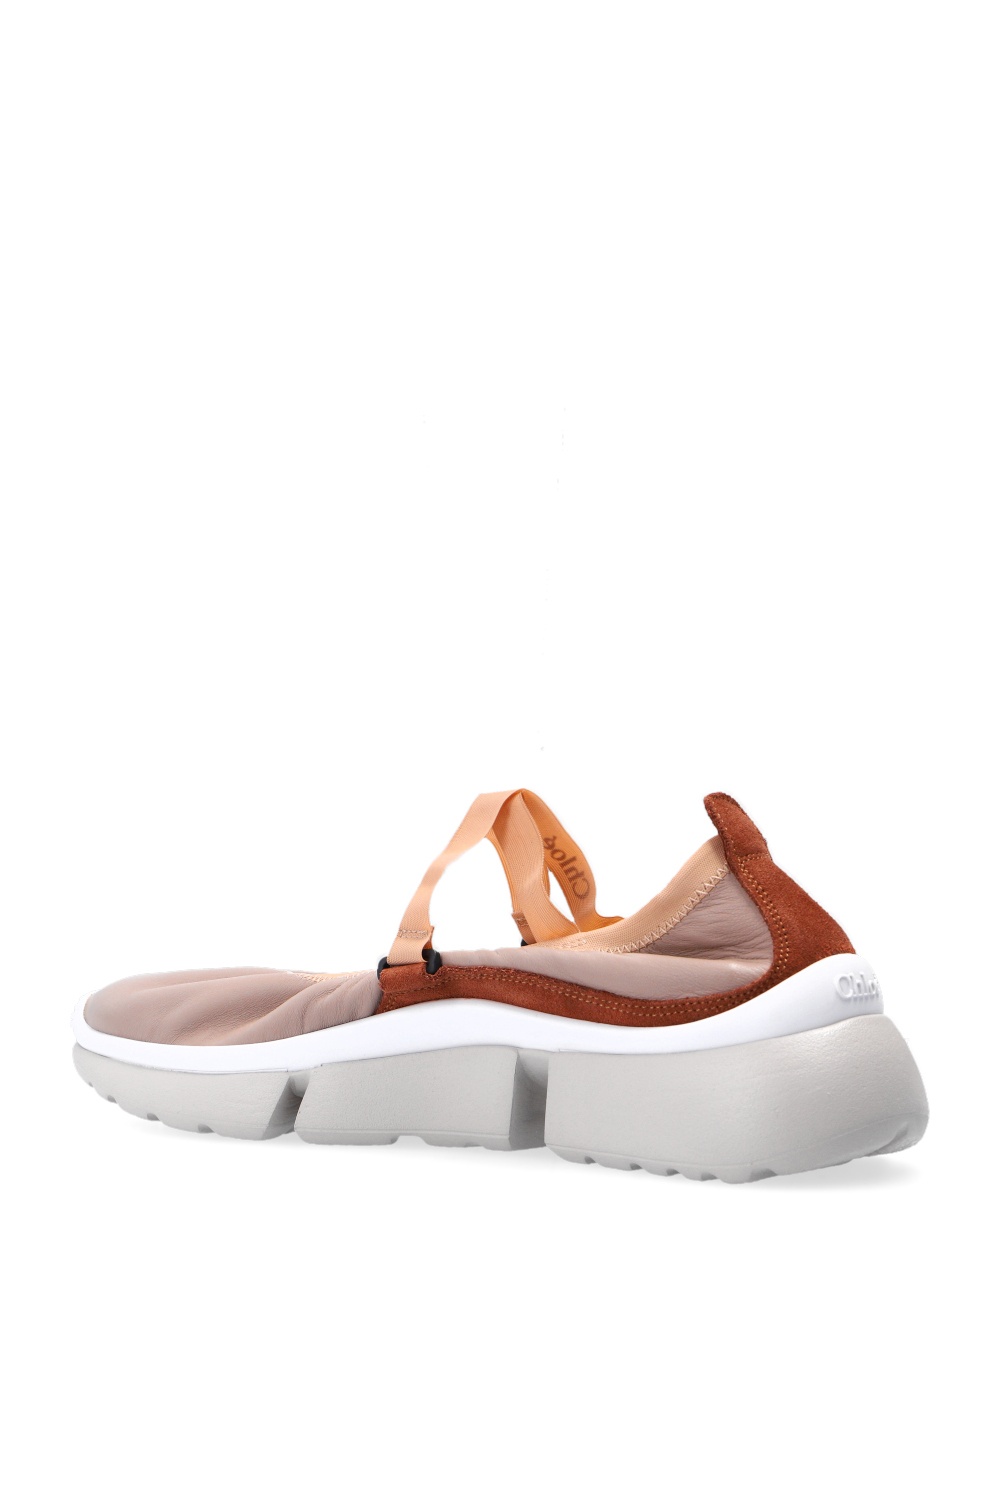 Chloé ‘Sonnie’ sneakers